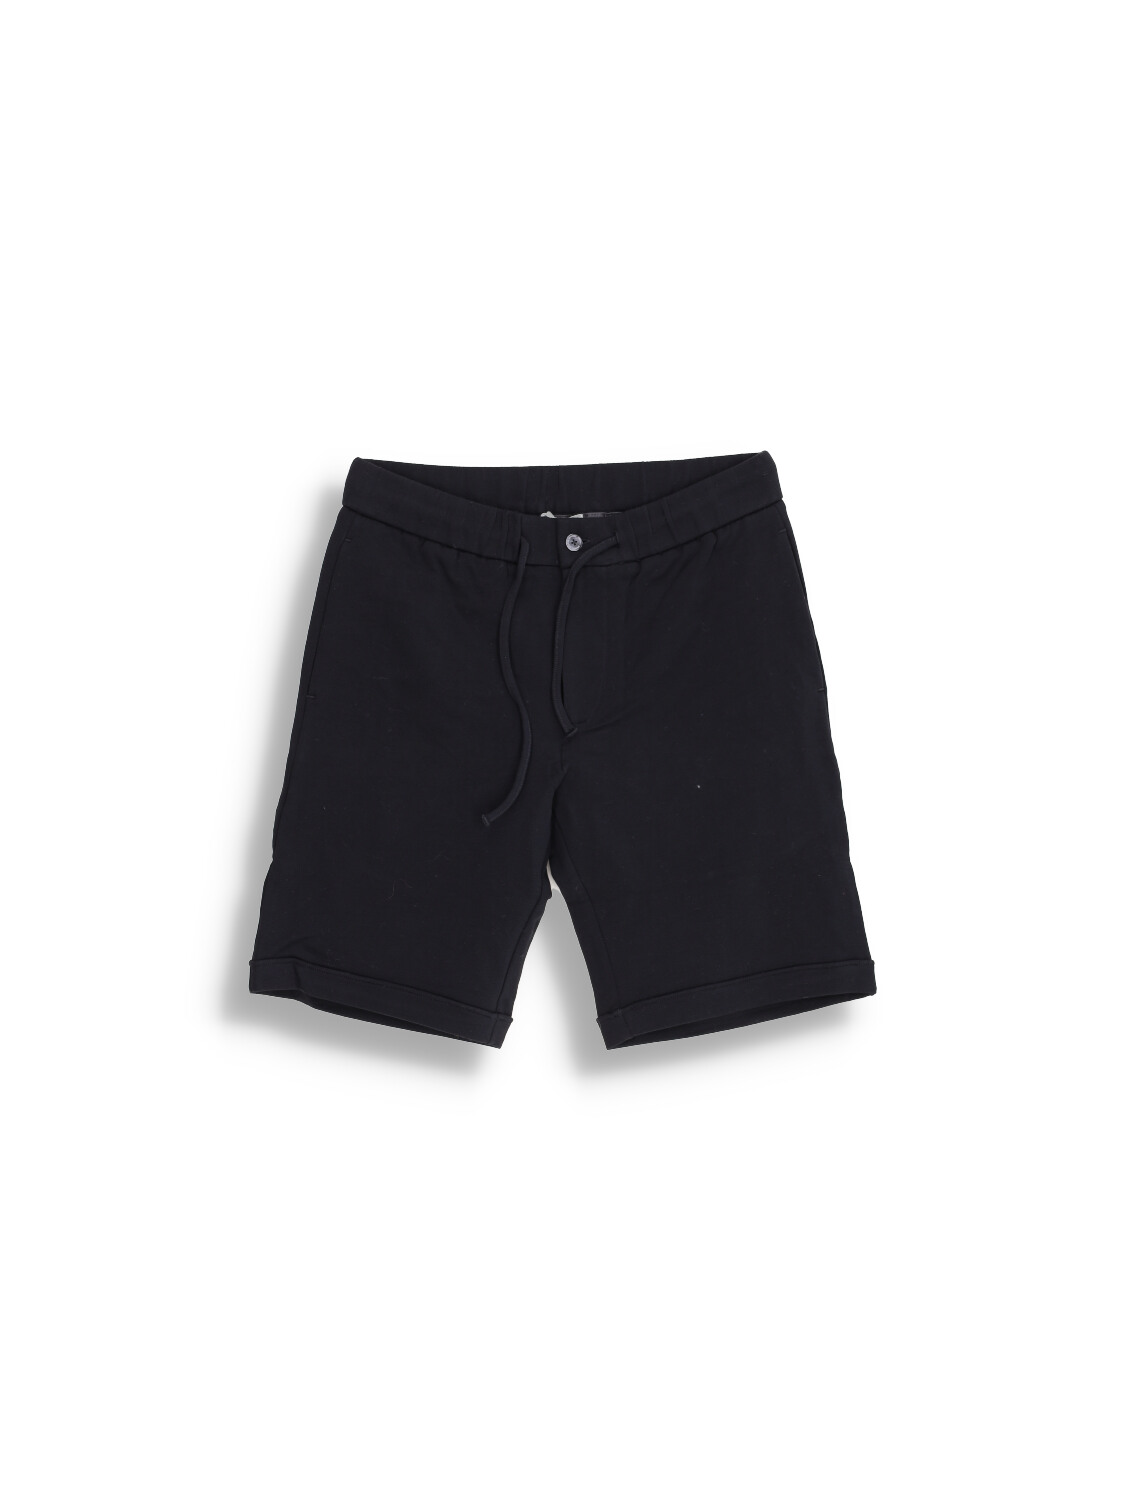 Stefan Brandt Jon Bermuda - Cotton elasticated waistband shorts black M